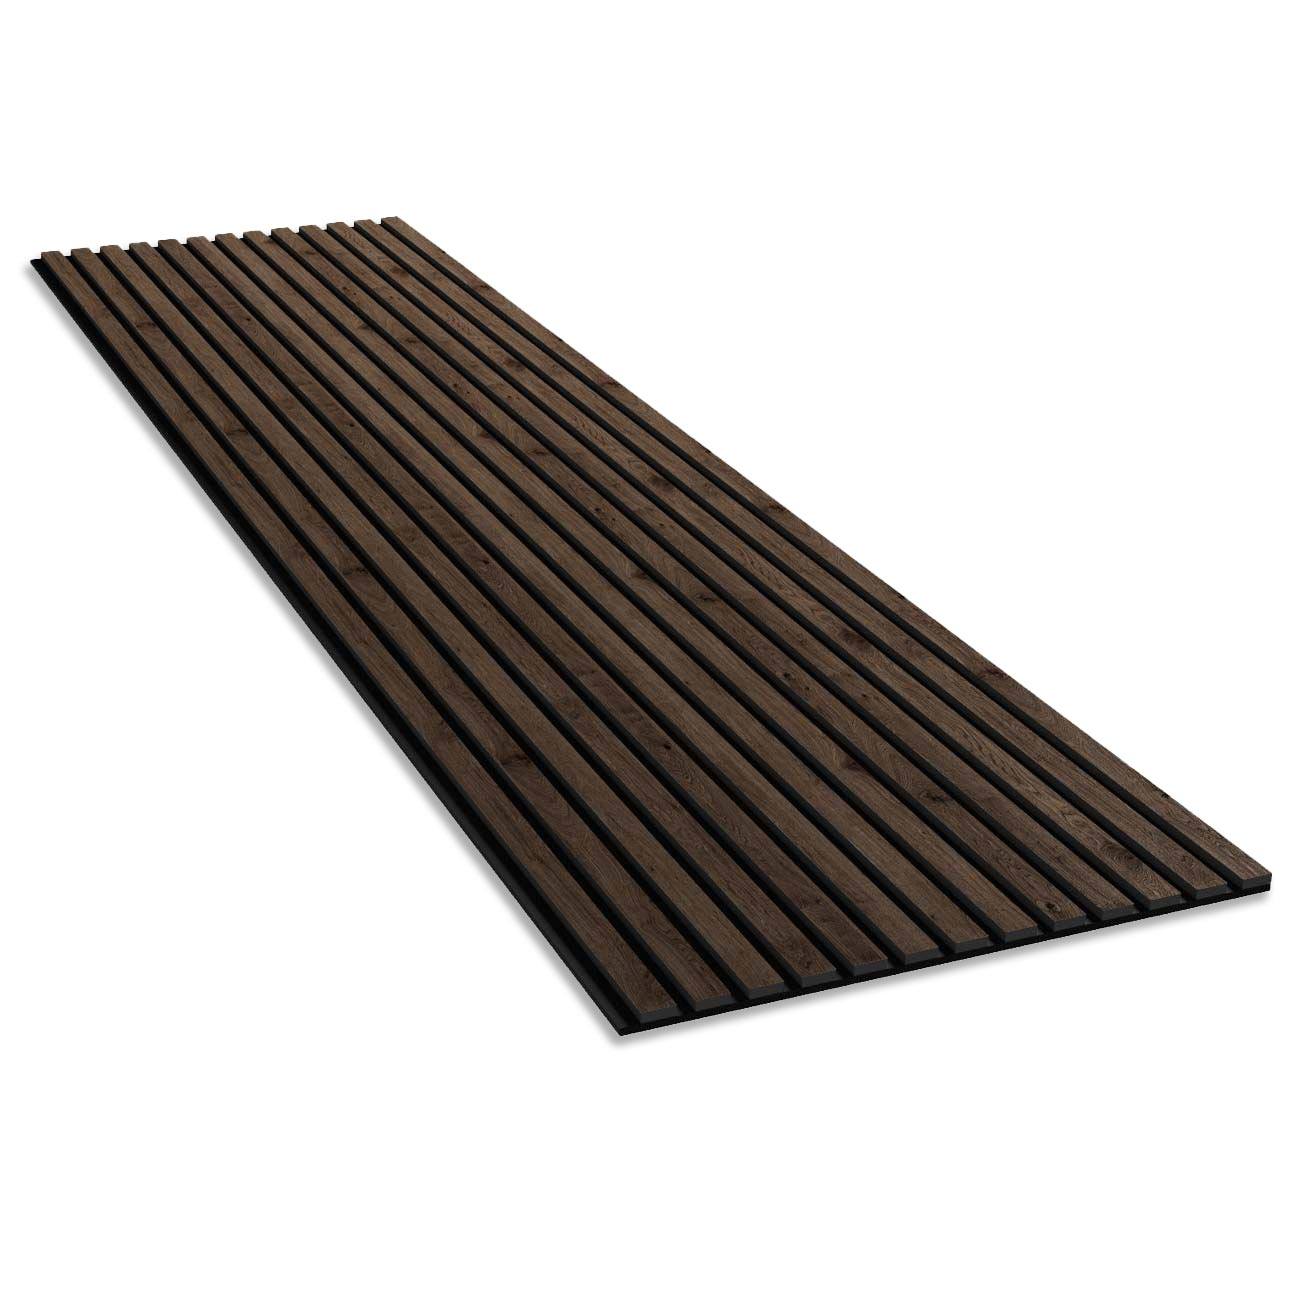 Smoked Oak Acoustic Slat Wood Panel 280 x 60 - Slats acoustic 3D Panels | DecorMania